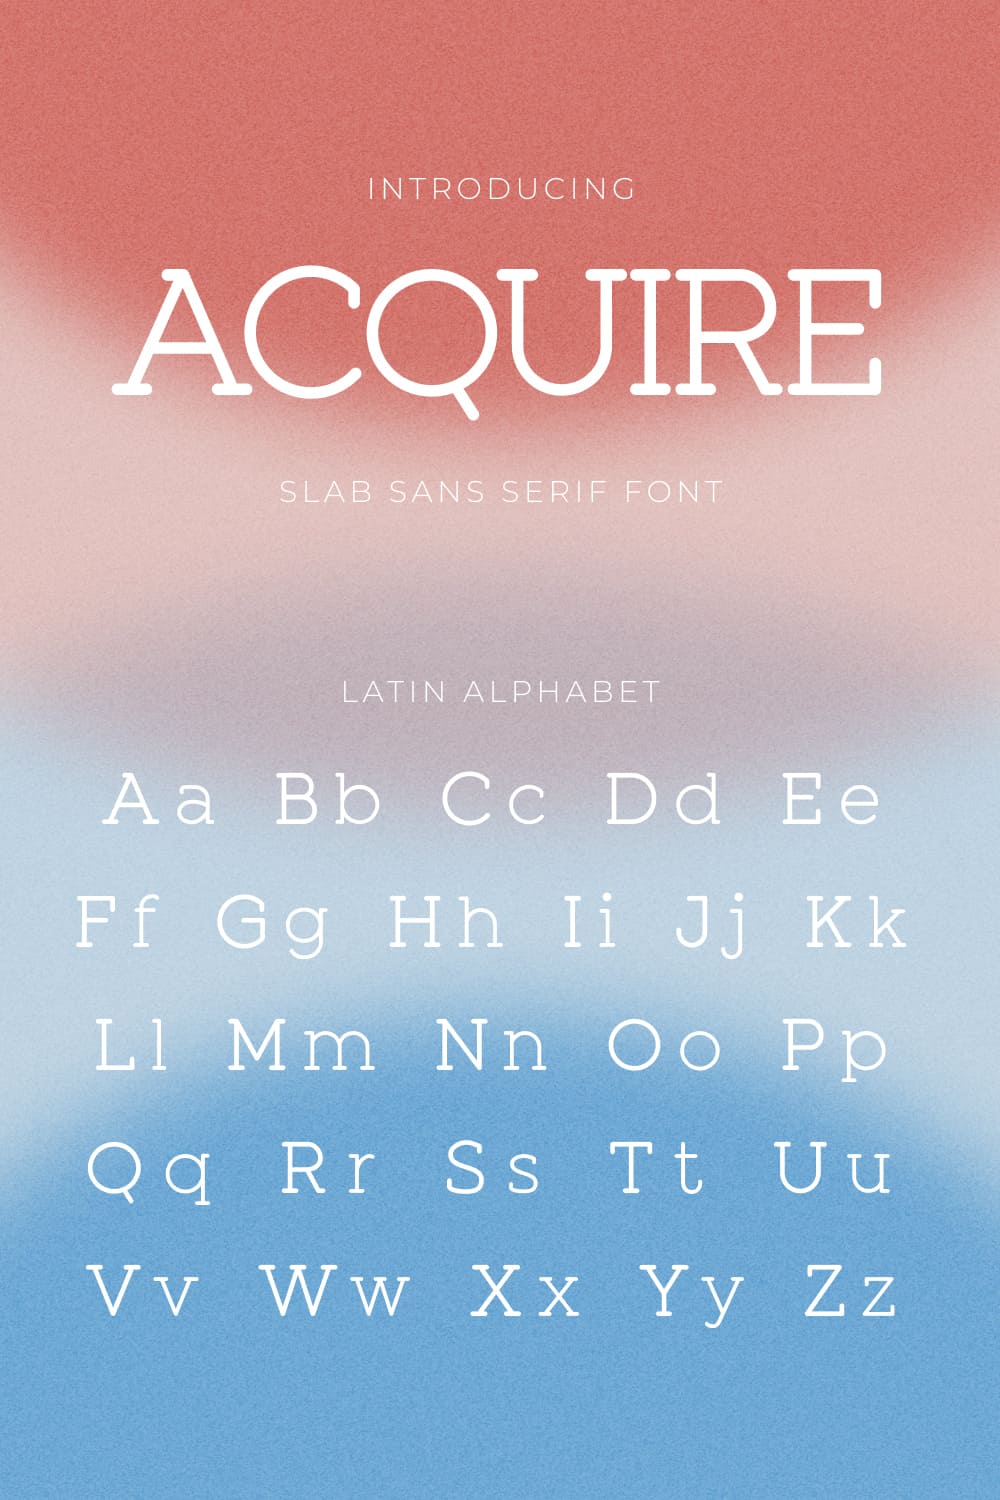 Acquire slab sans serif font Pinterest MasterBundles Collage Image with latin alphabet.